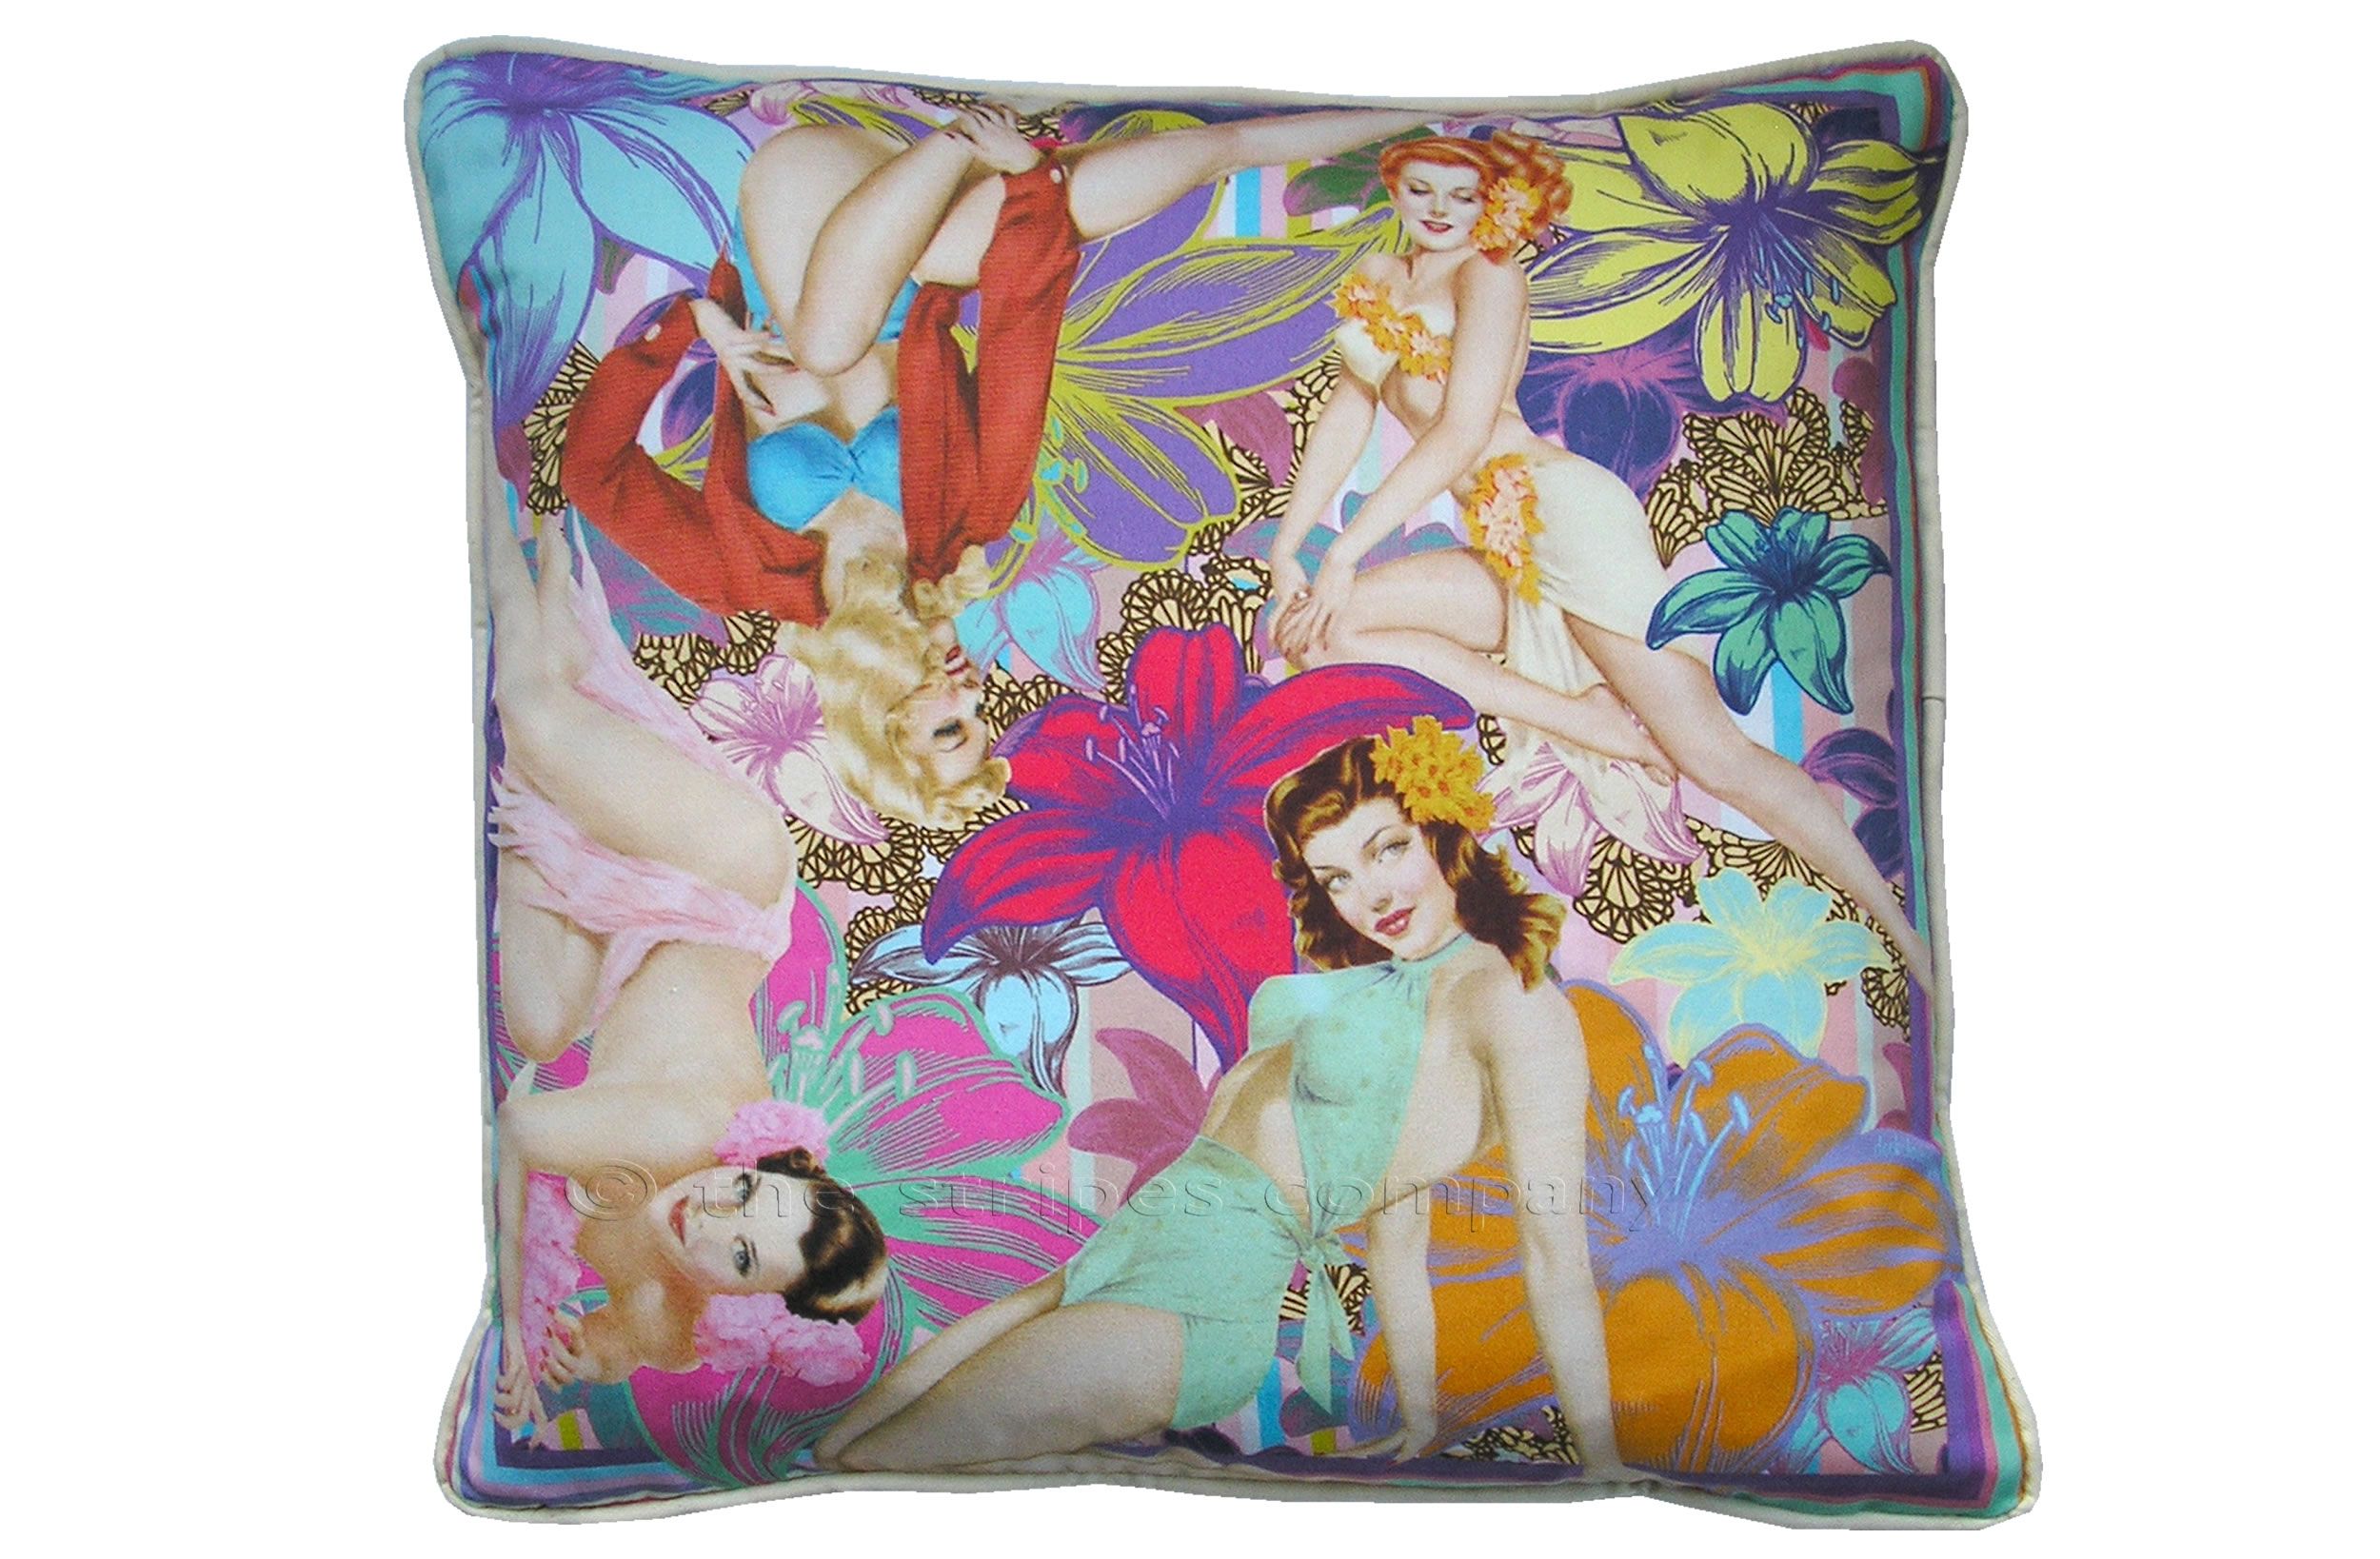 Retro Glamour Girls Vintage Print Design Cushions